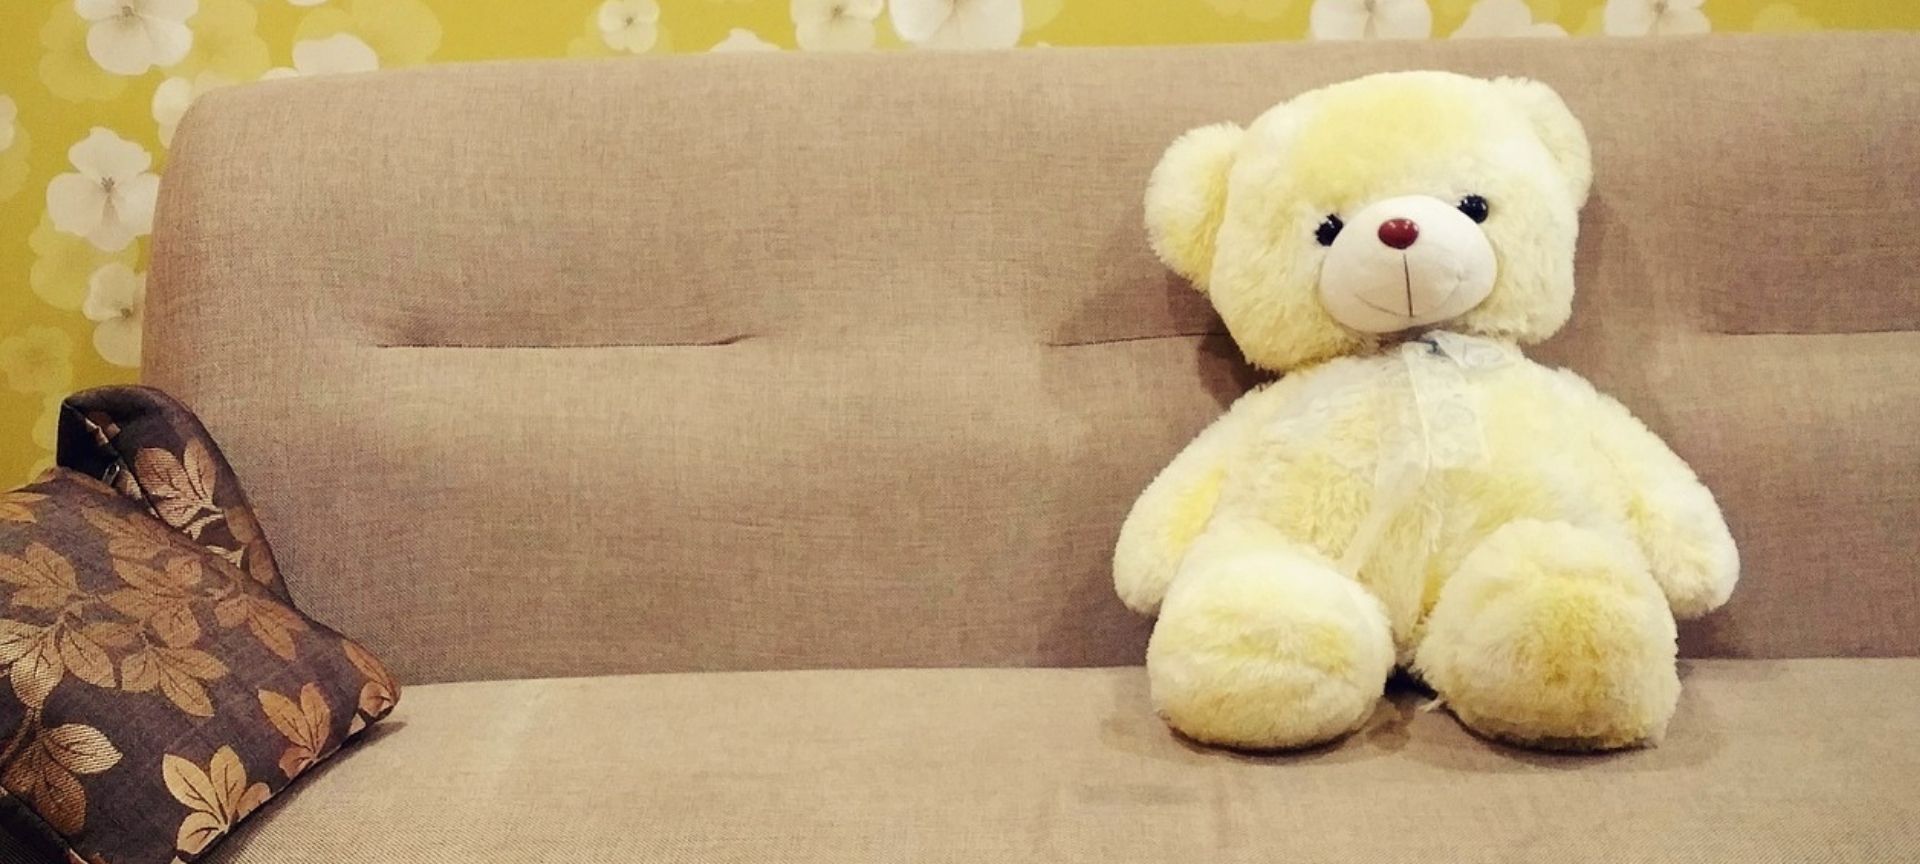 Sofa with teddy and cushion